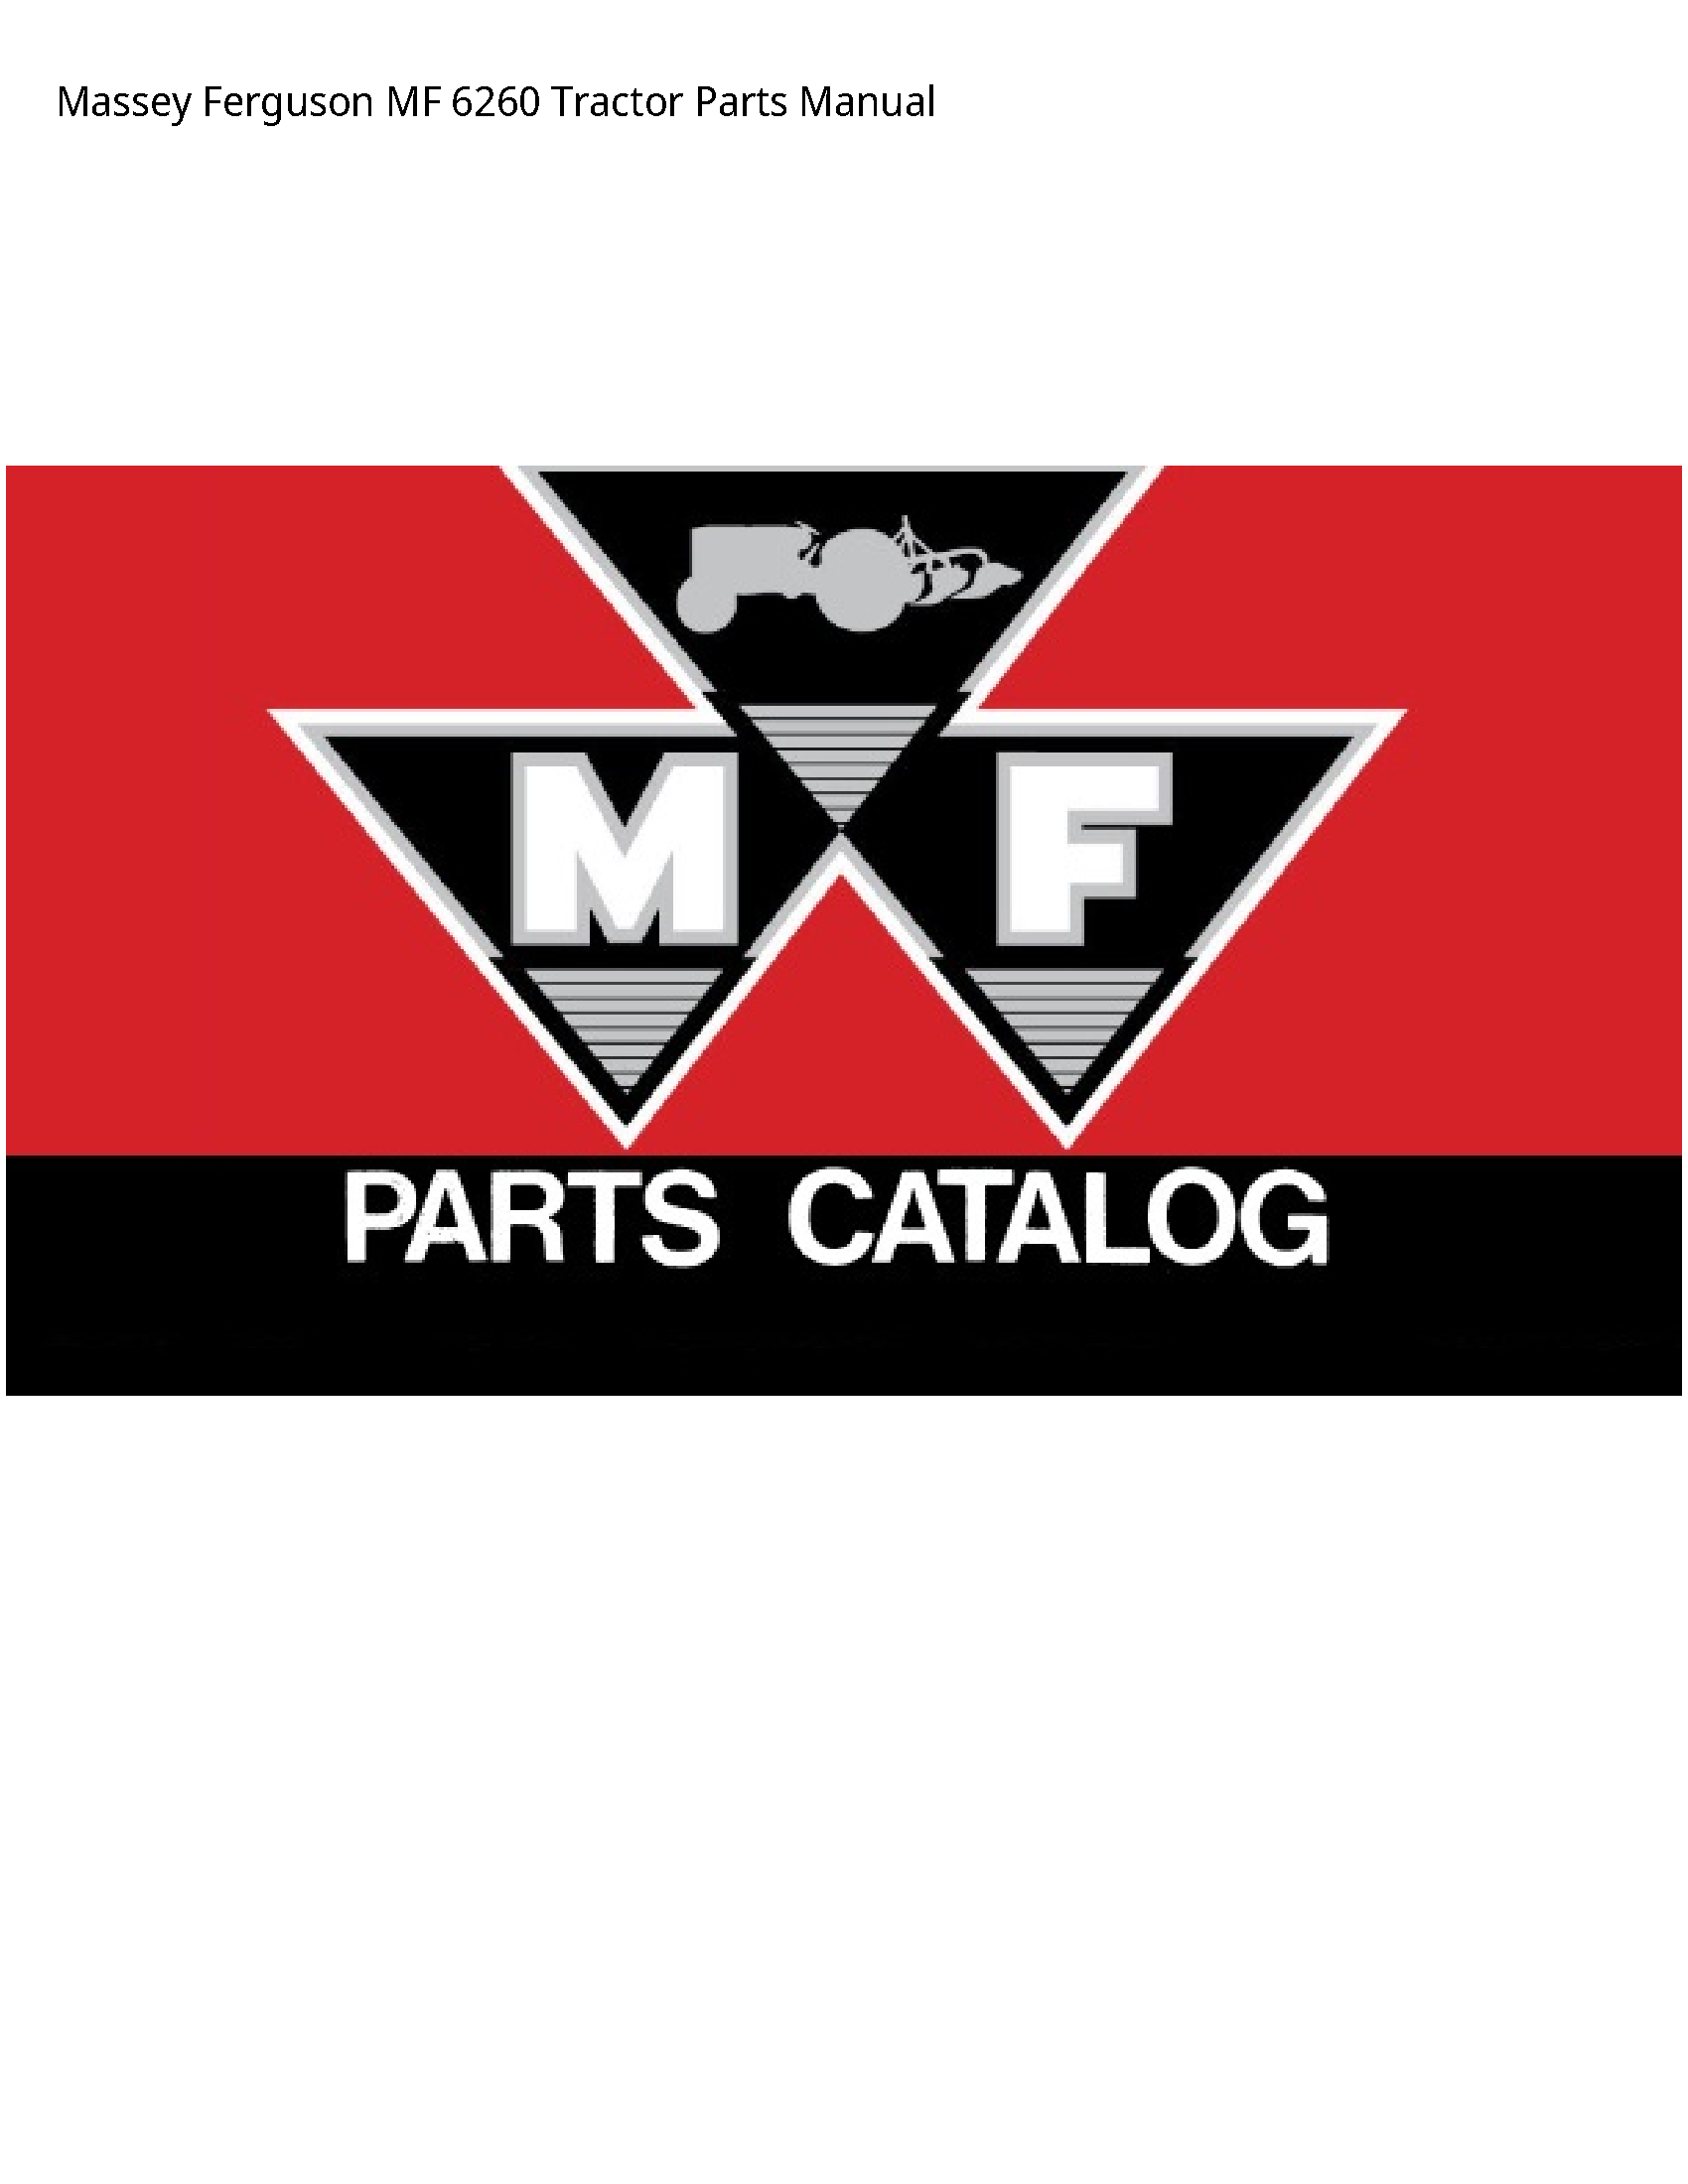 Massey Ferguson 6260 MF Tractor Parts manual